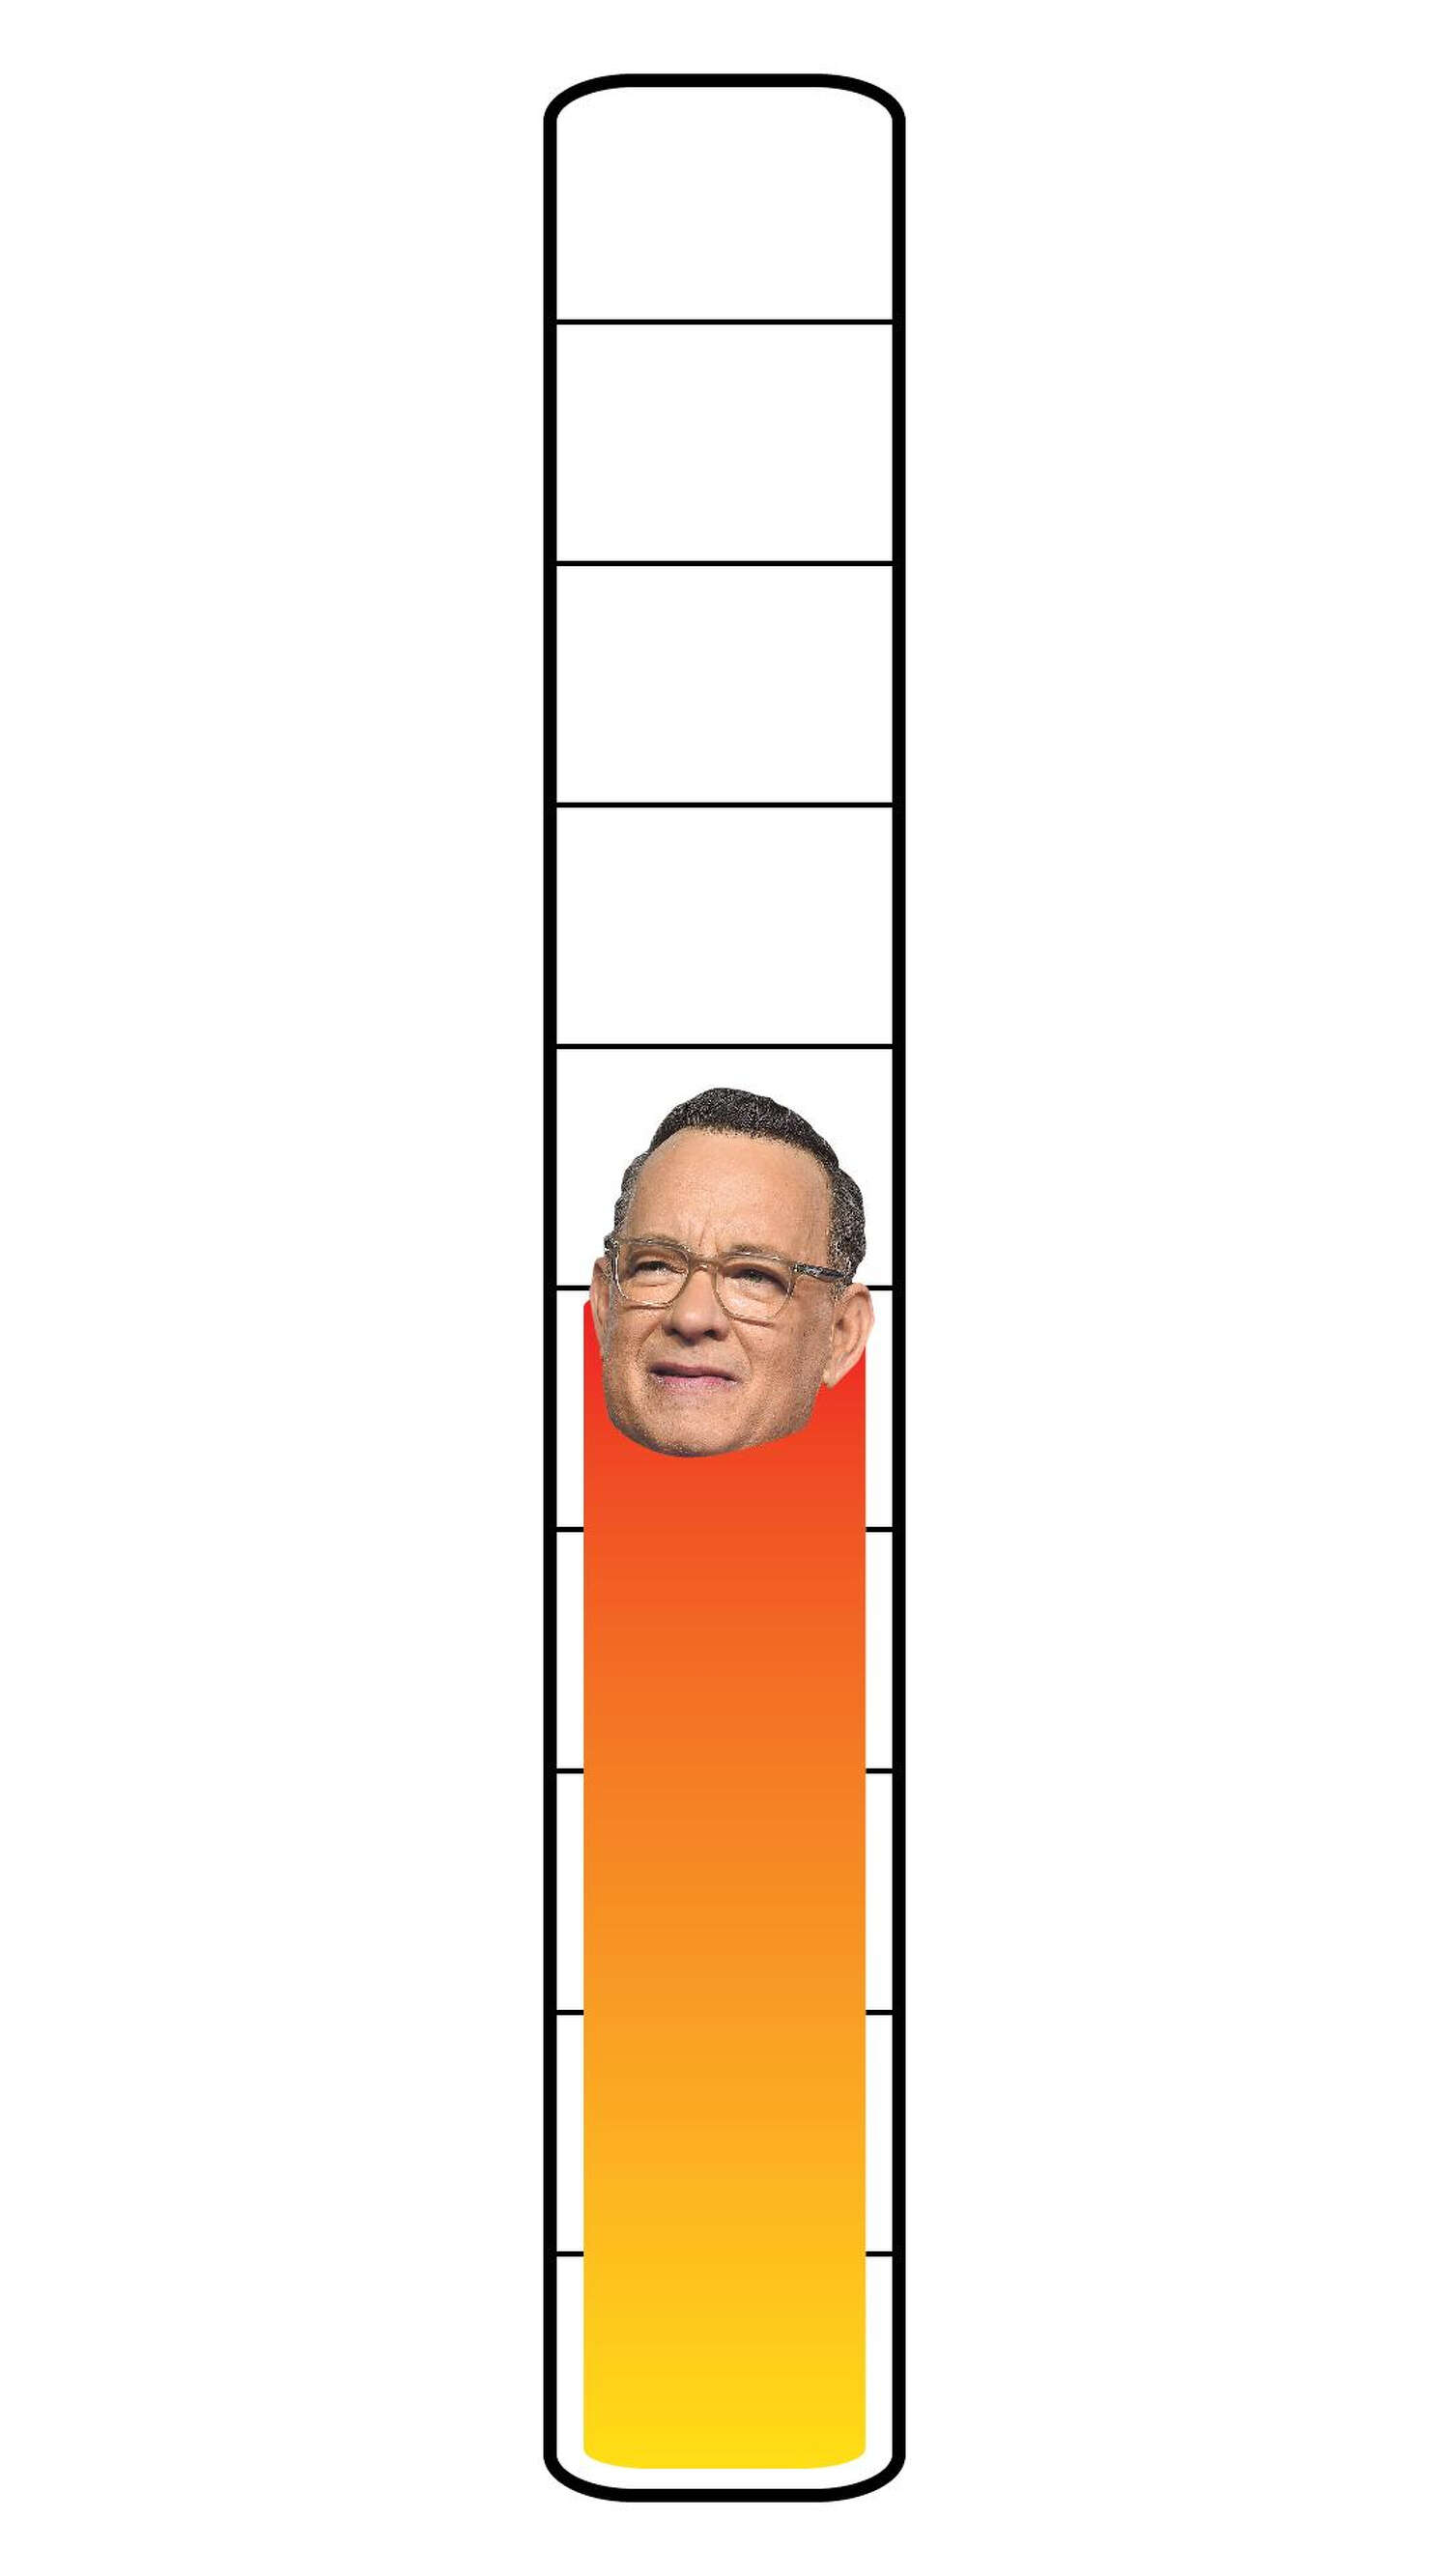 Meter: 5/10. Icon of Tom Hanks.